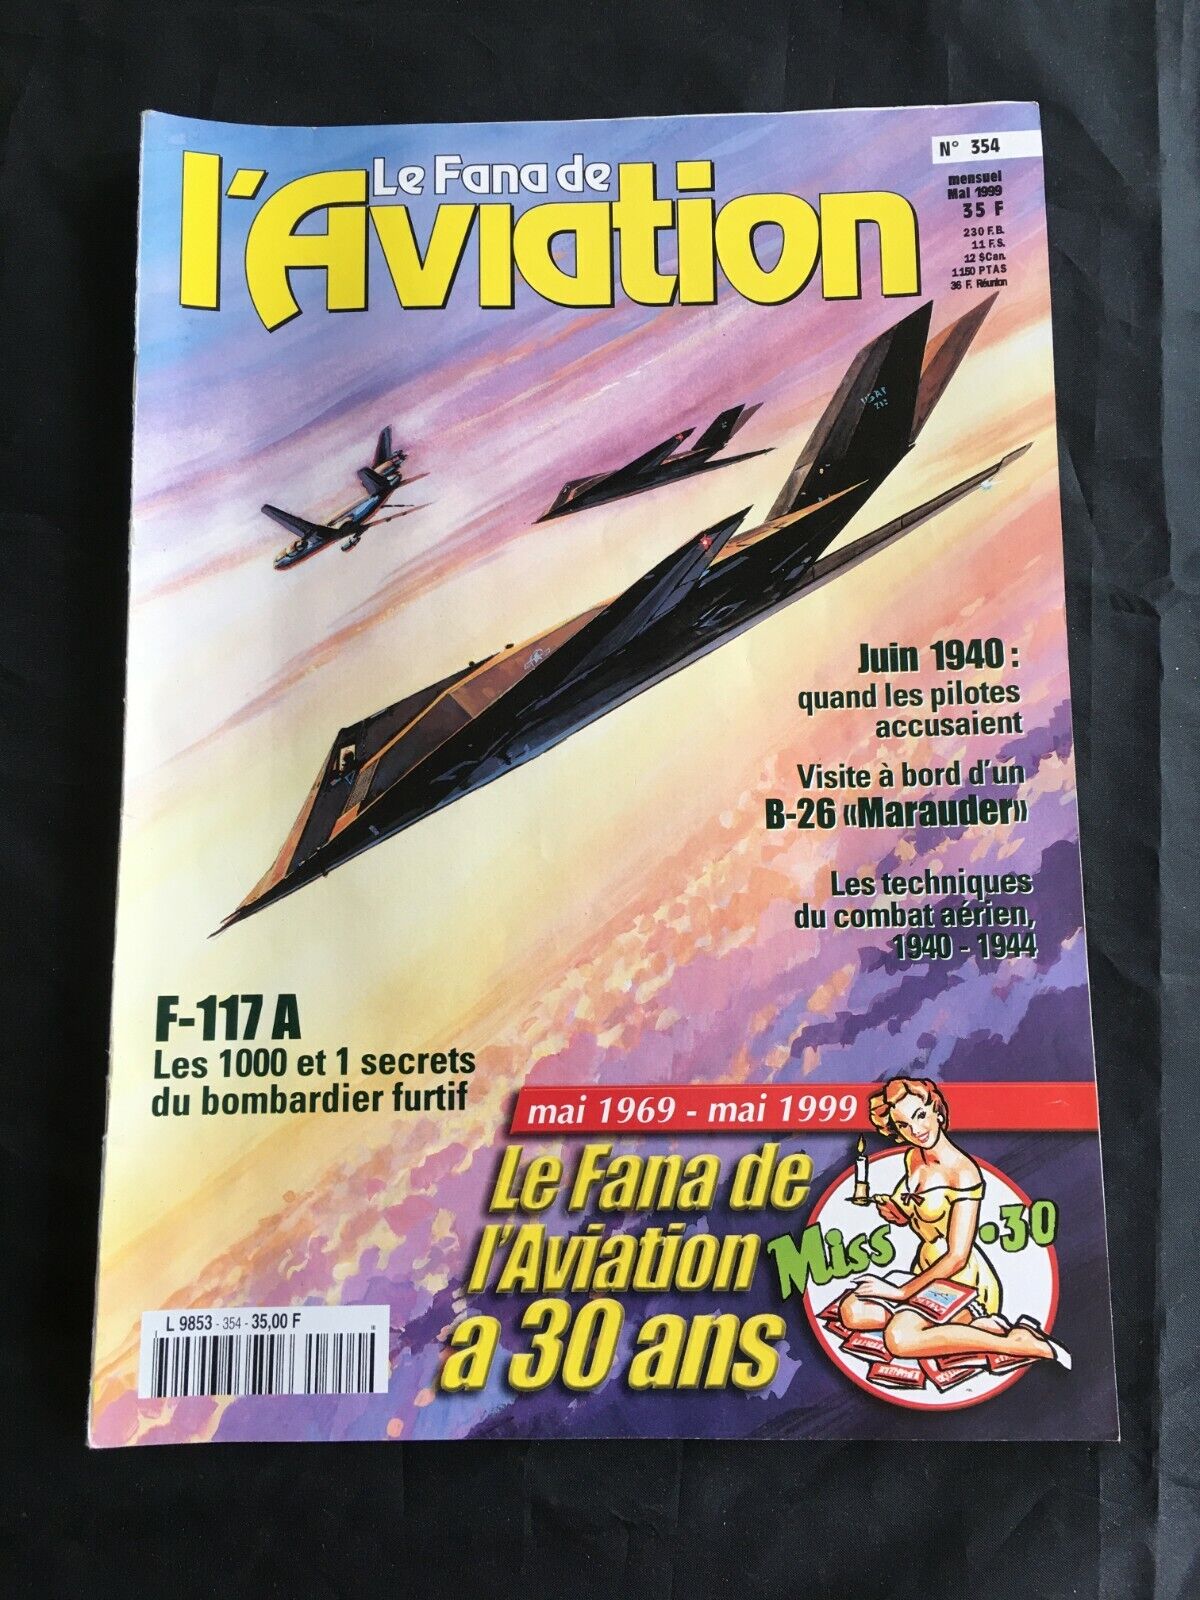 Le fana de L'Aviation magazine magazine n° 354 30 years F 117 A / B26 Marauder